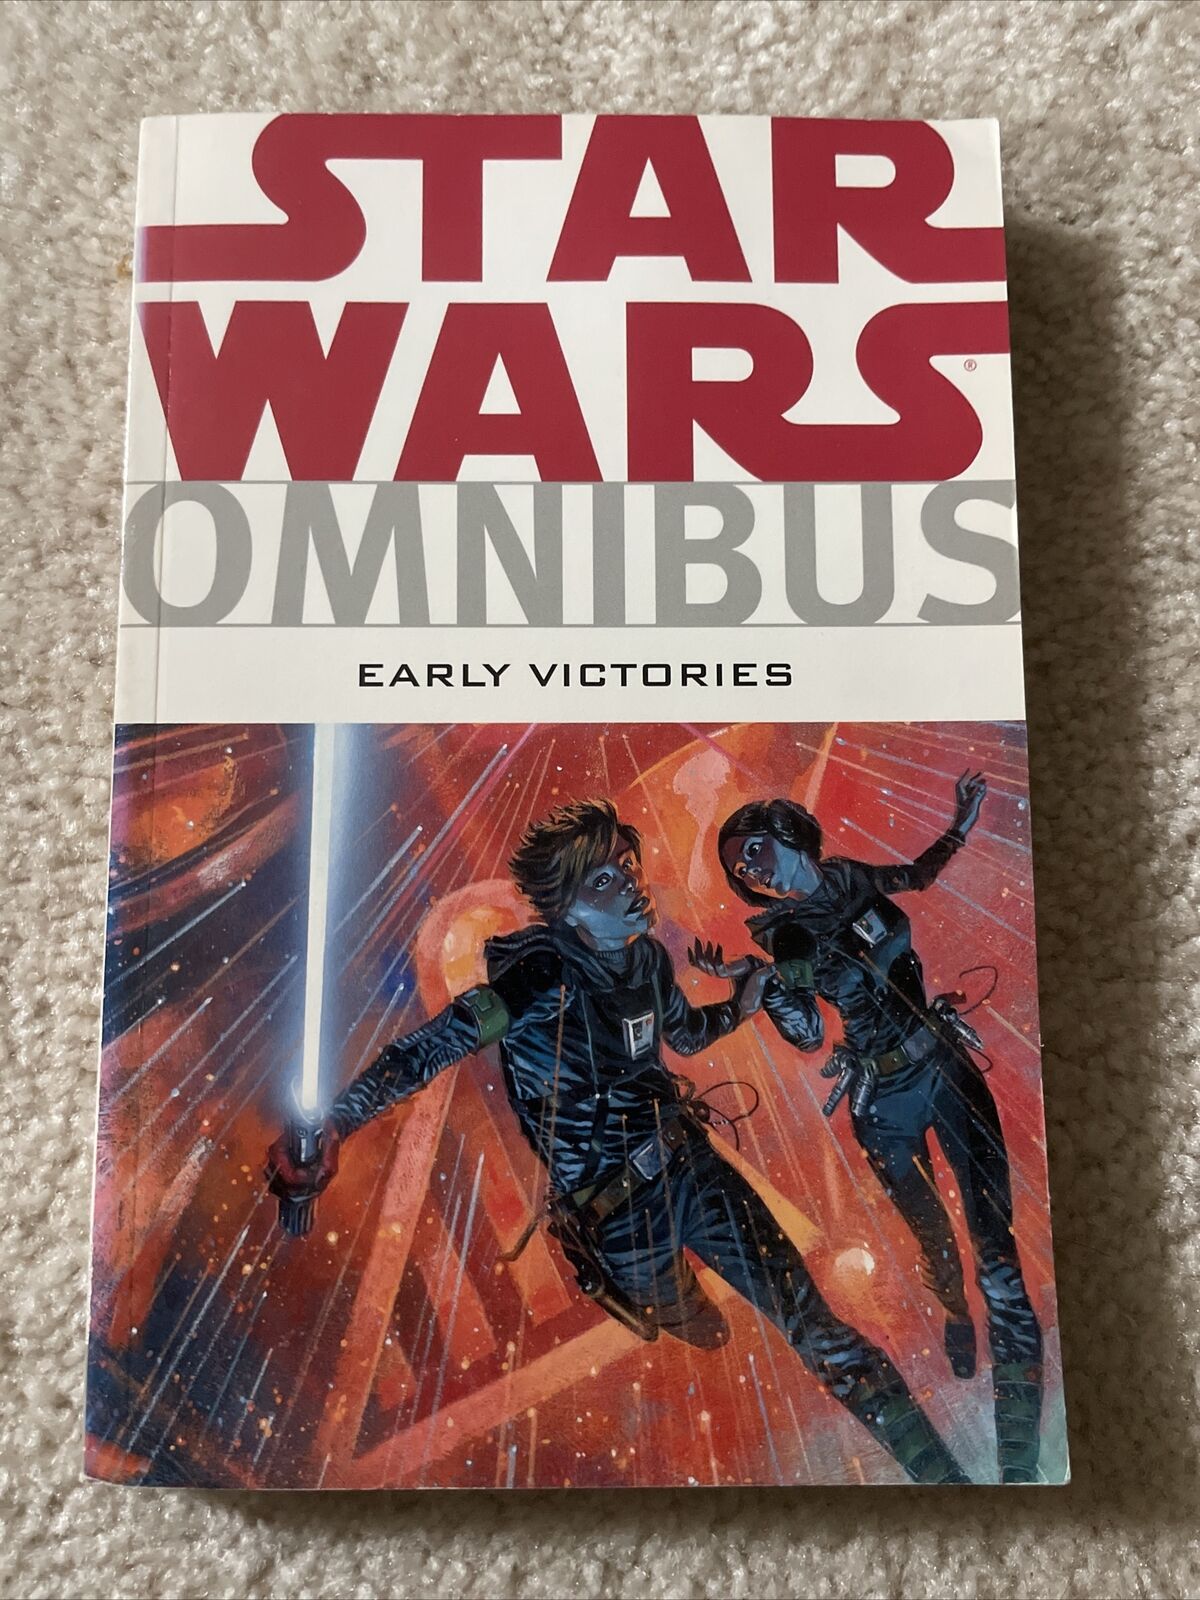 Star Wars Omnibus: Early Victories (Dark Horse Comics, 2008) Paperback